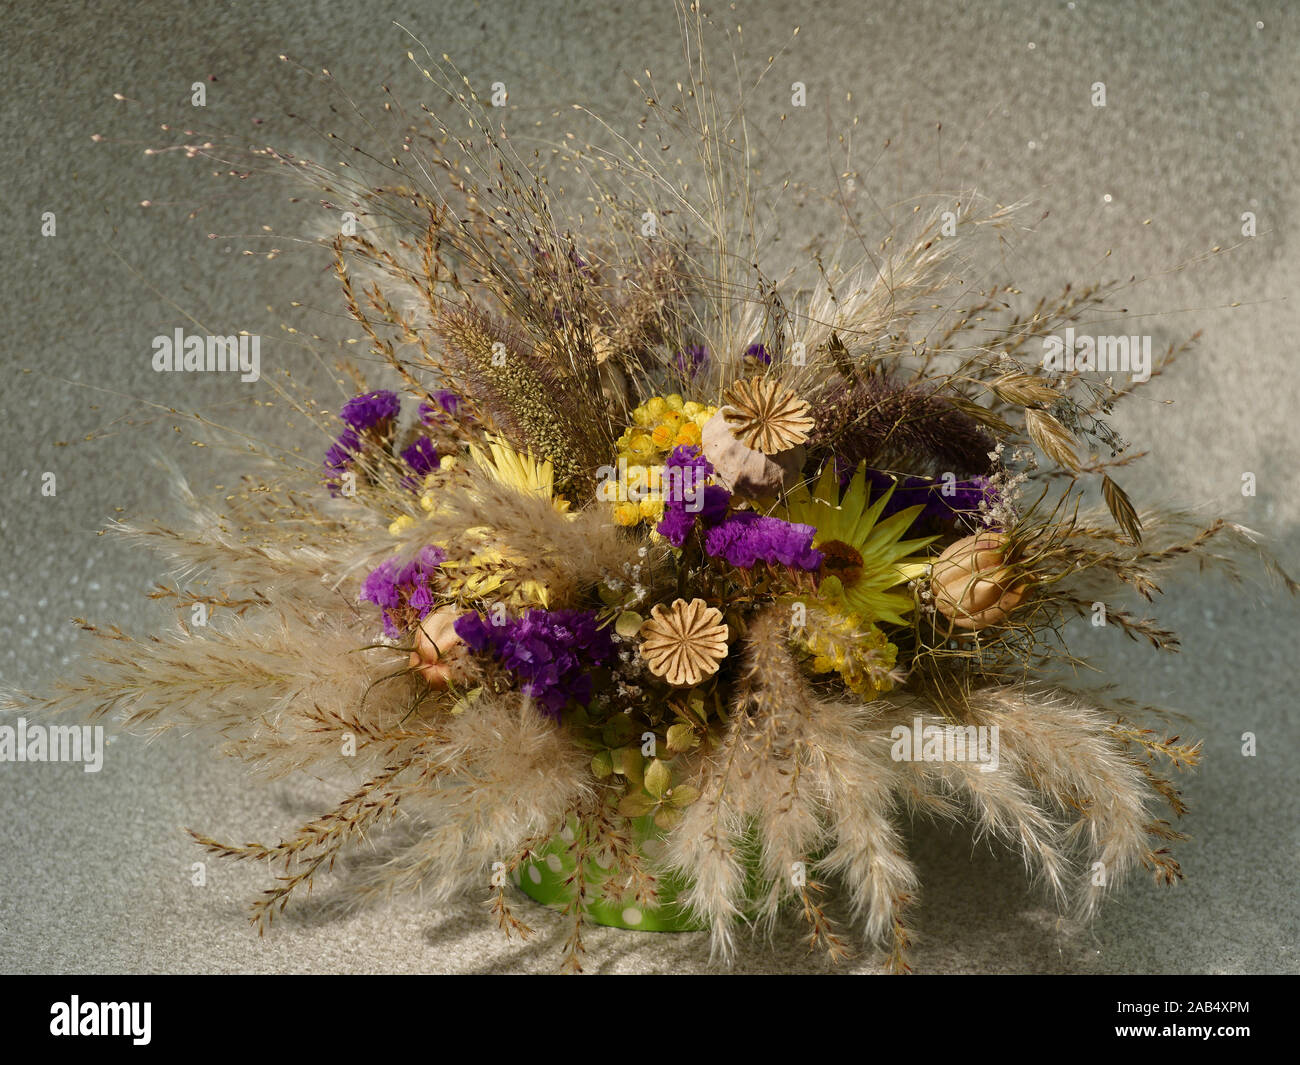 Dried flower and grass arrangement Stock Photo